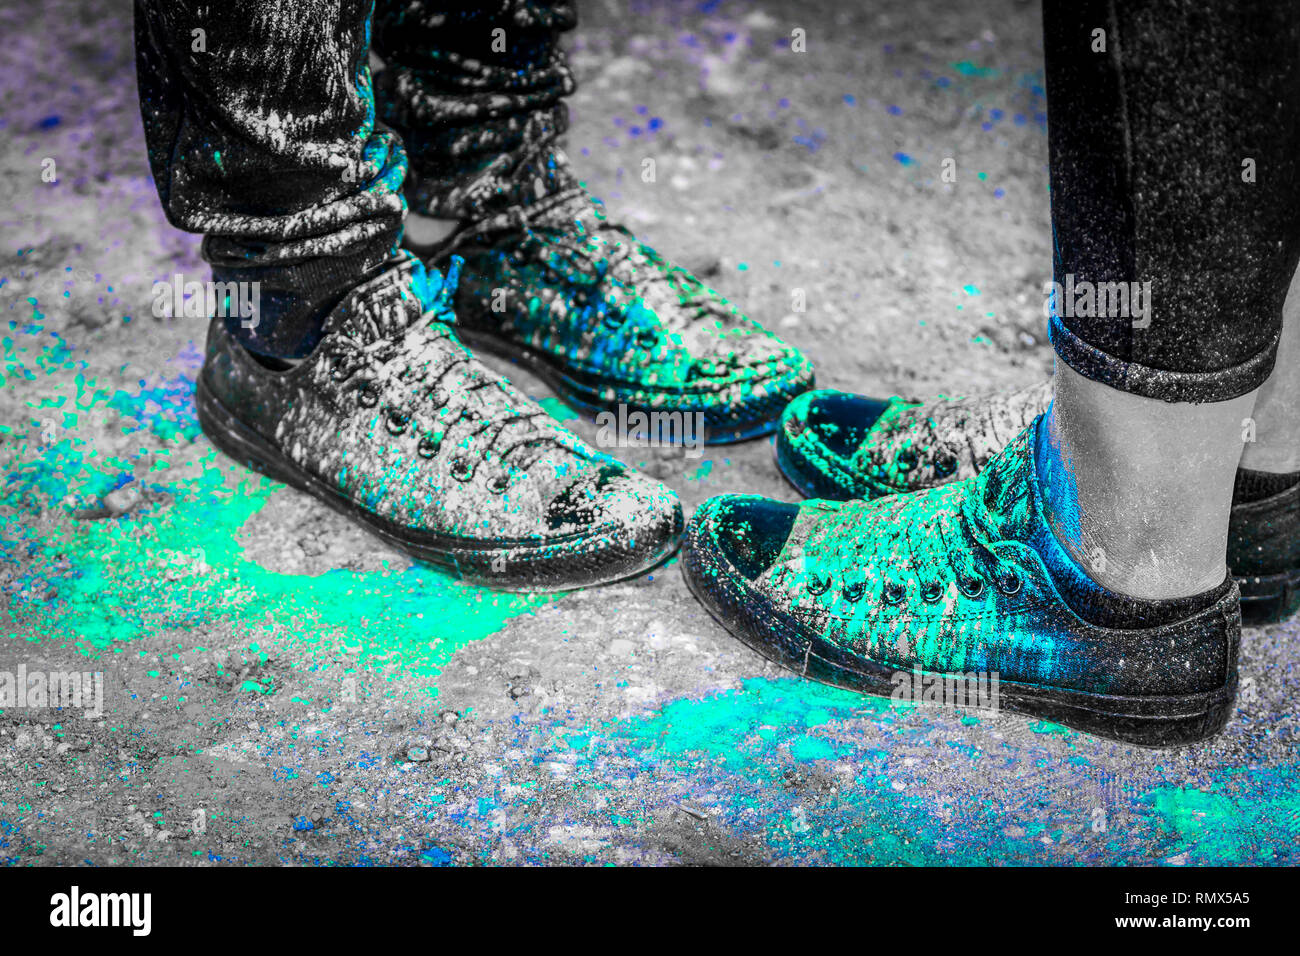 Nero scarpe running coperti in colorate di vernice in polvere Foto Stock